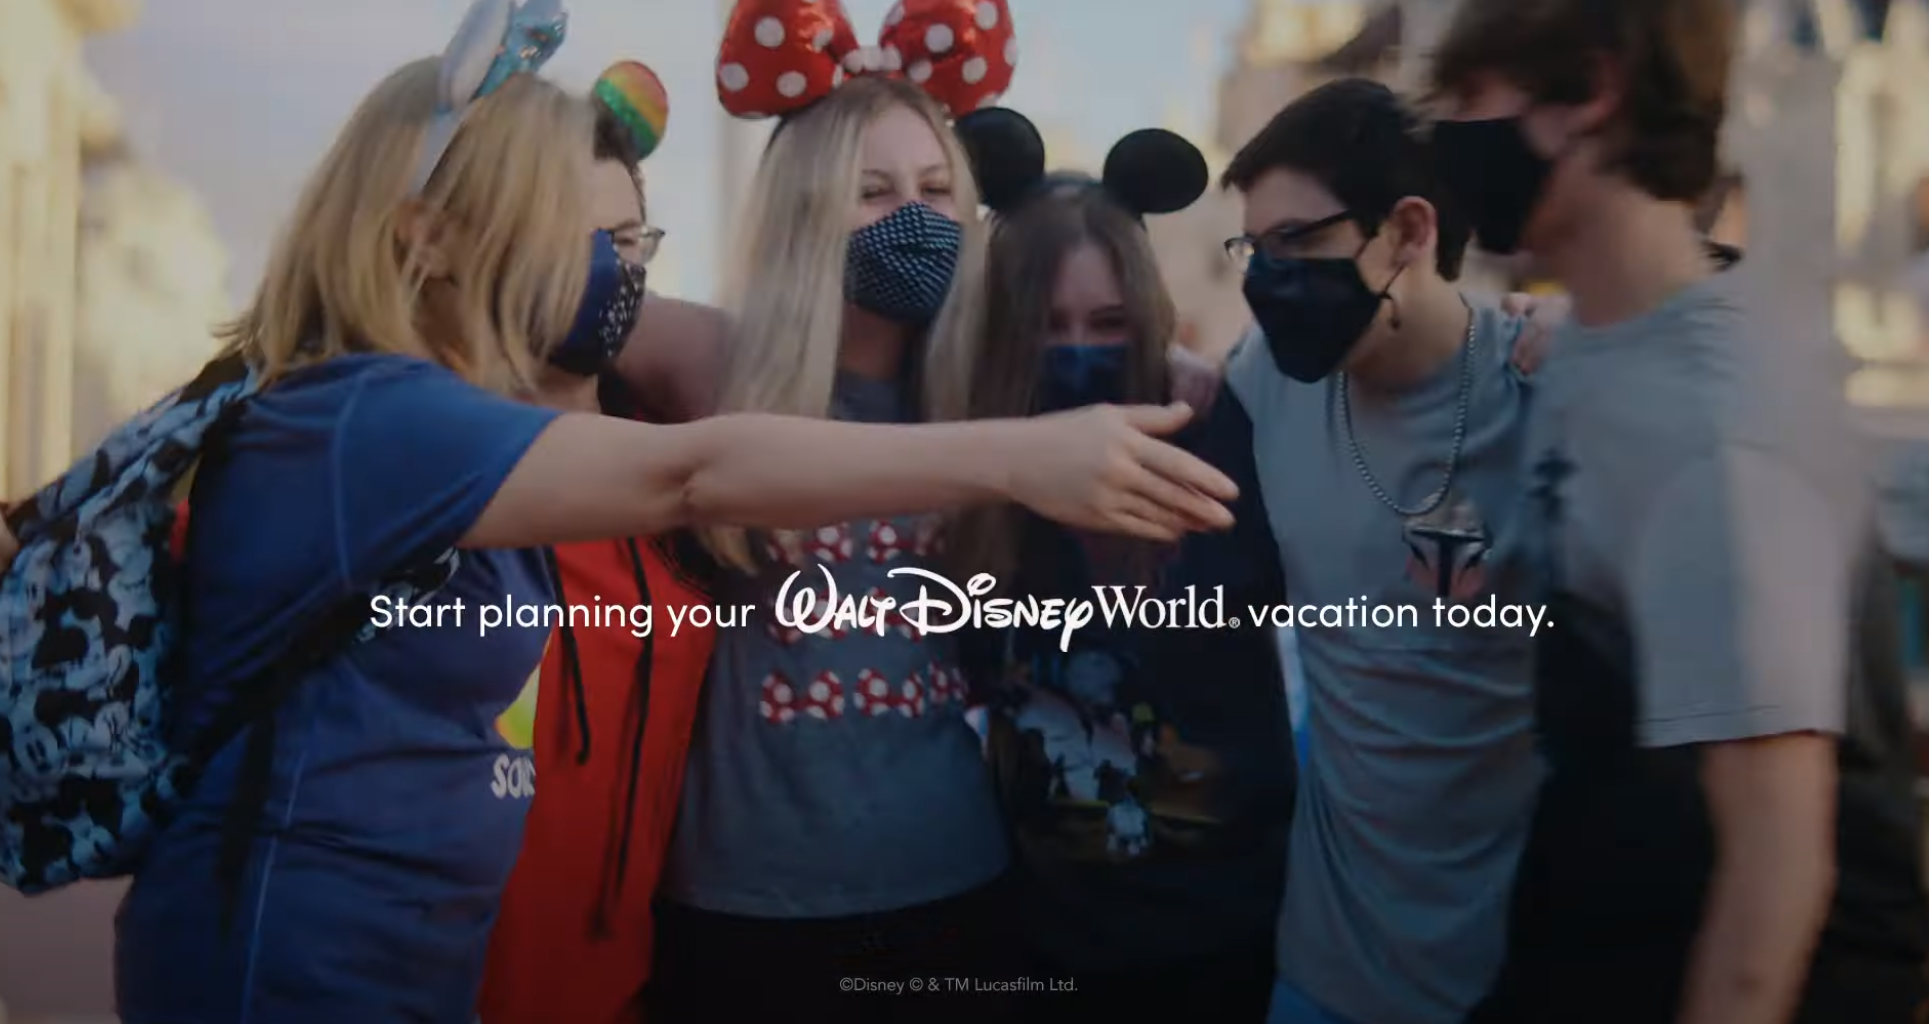 Walt Disney World “Tomorrow Begins Today” Campaign